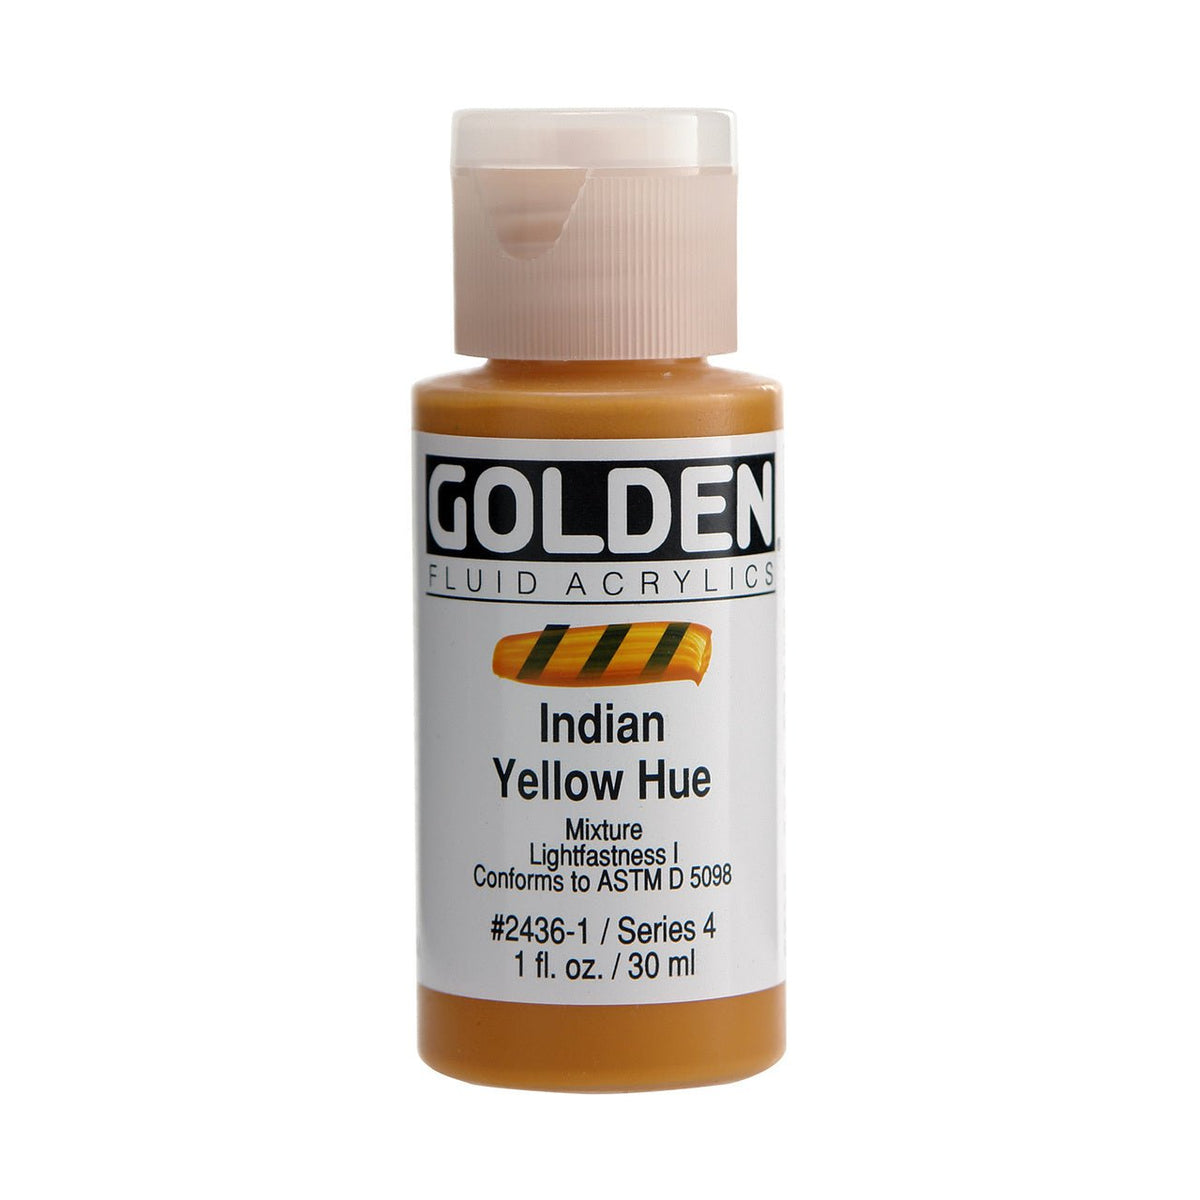 Golden Fluid Acrylic India Yellow Hue 1 oz - merriartist.com